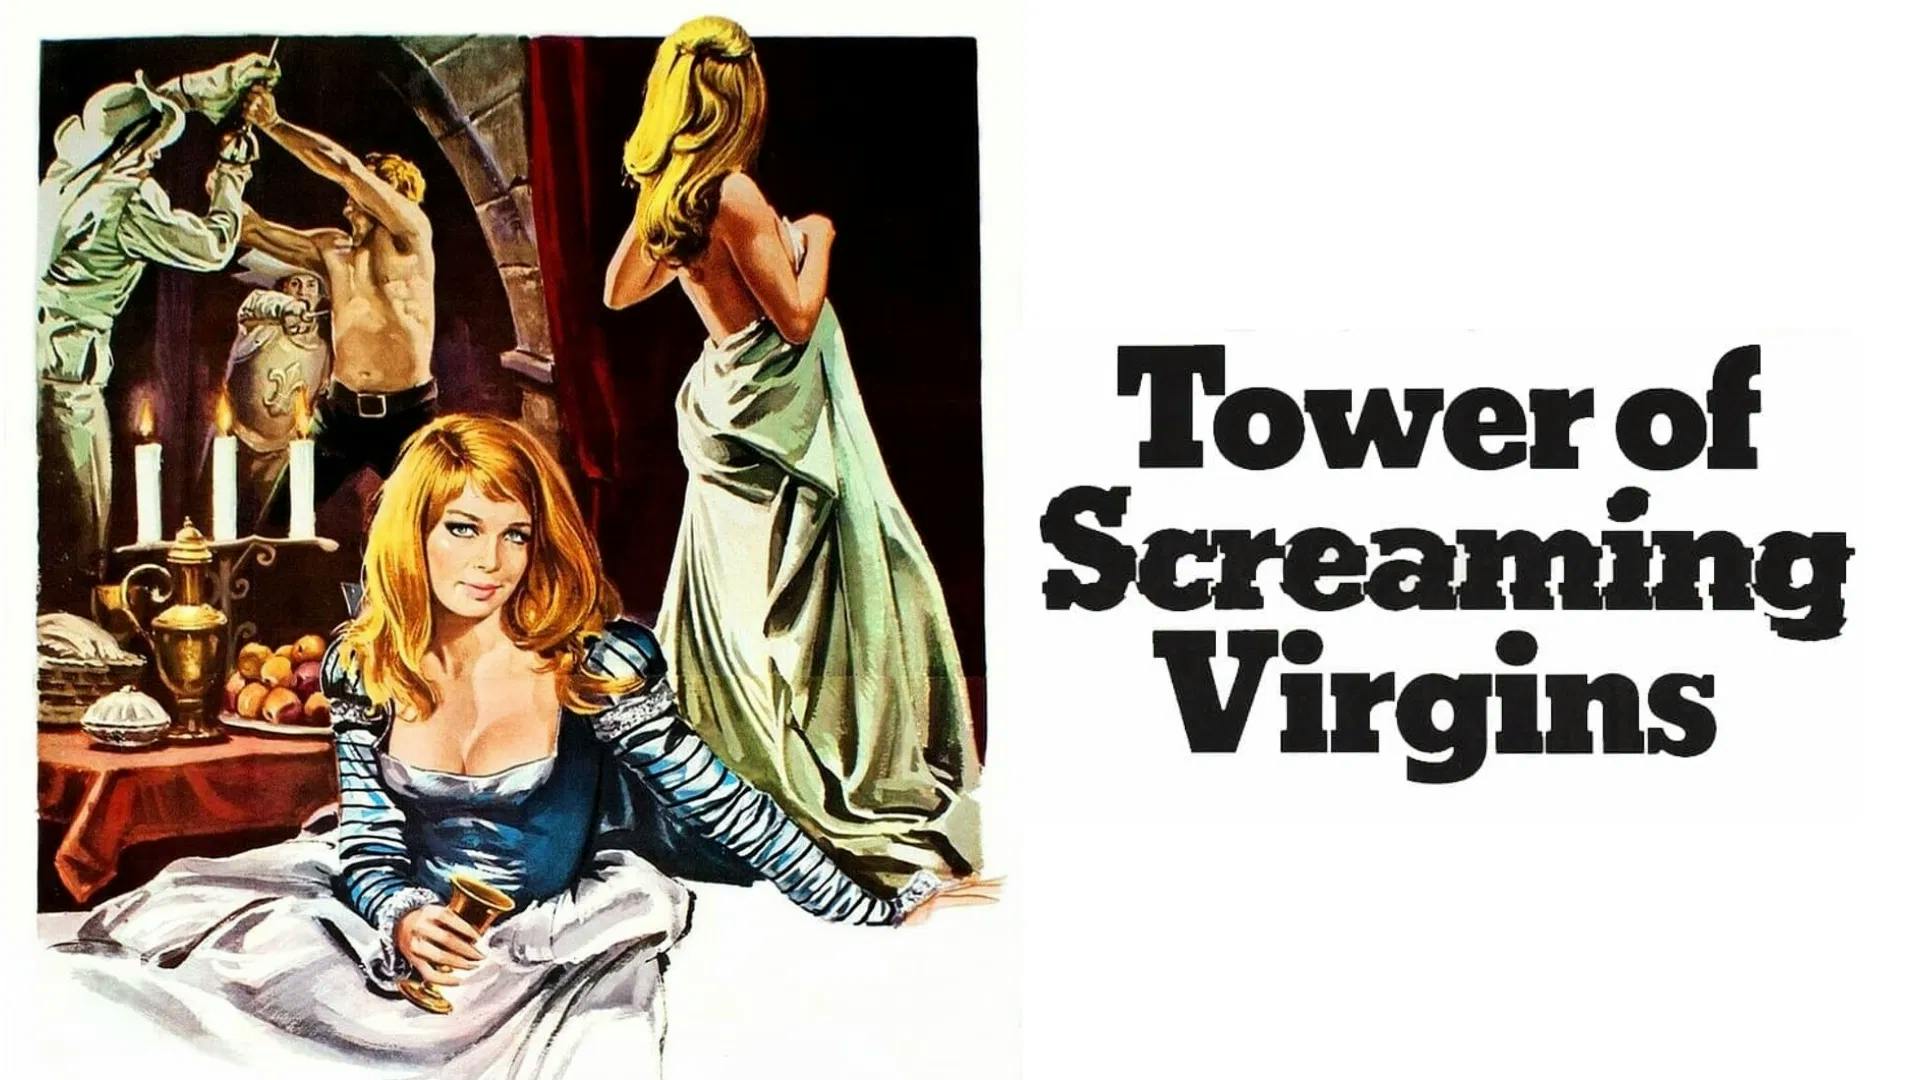 Tower of the Screaming Virgins